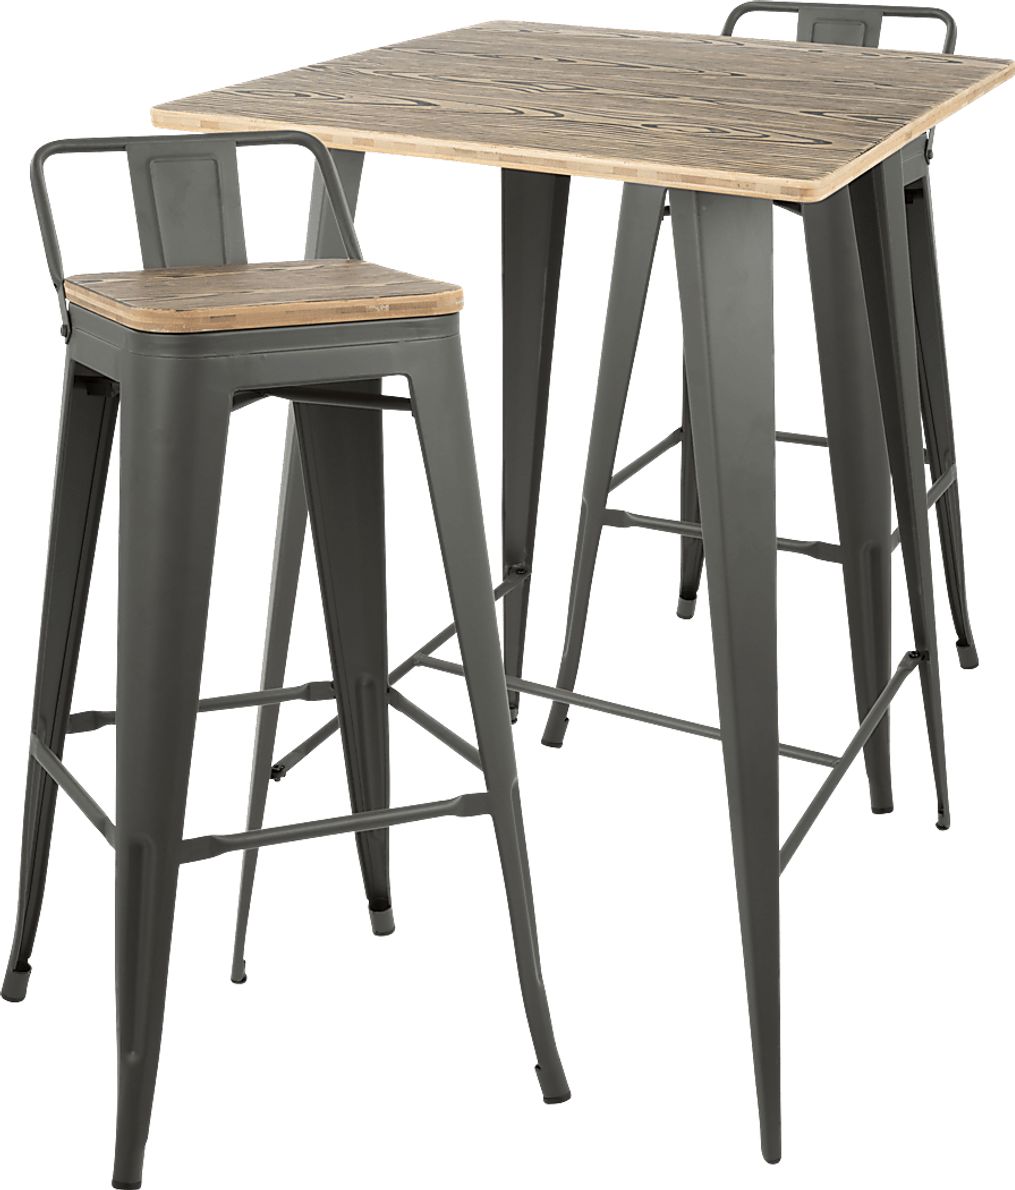 Aldersyde Gray 3 Pc Bar Height Table Set